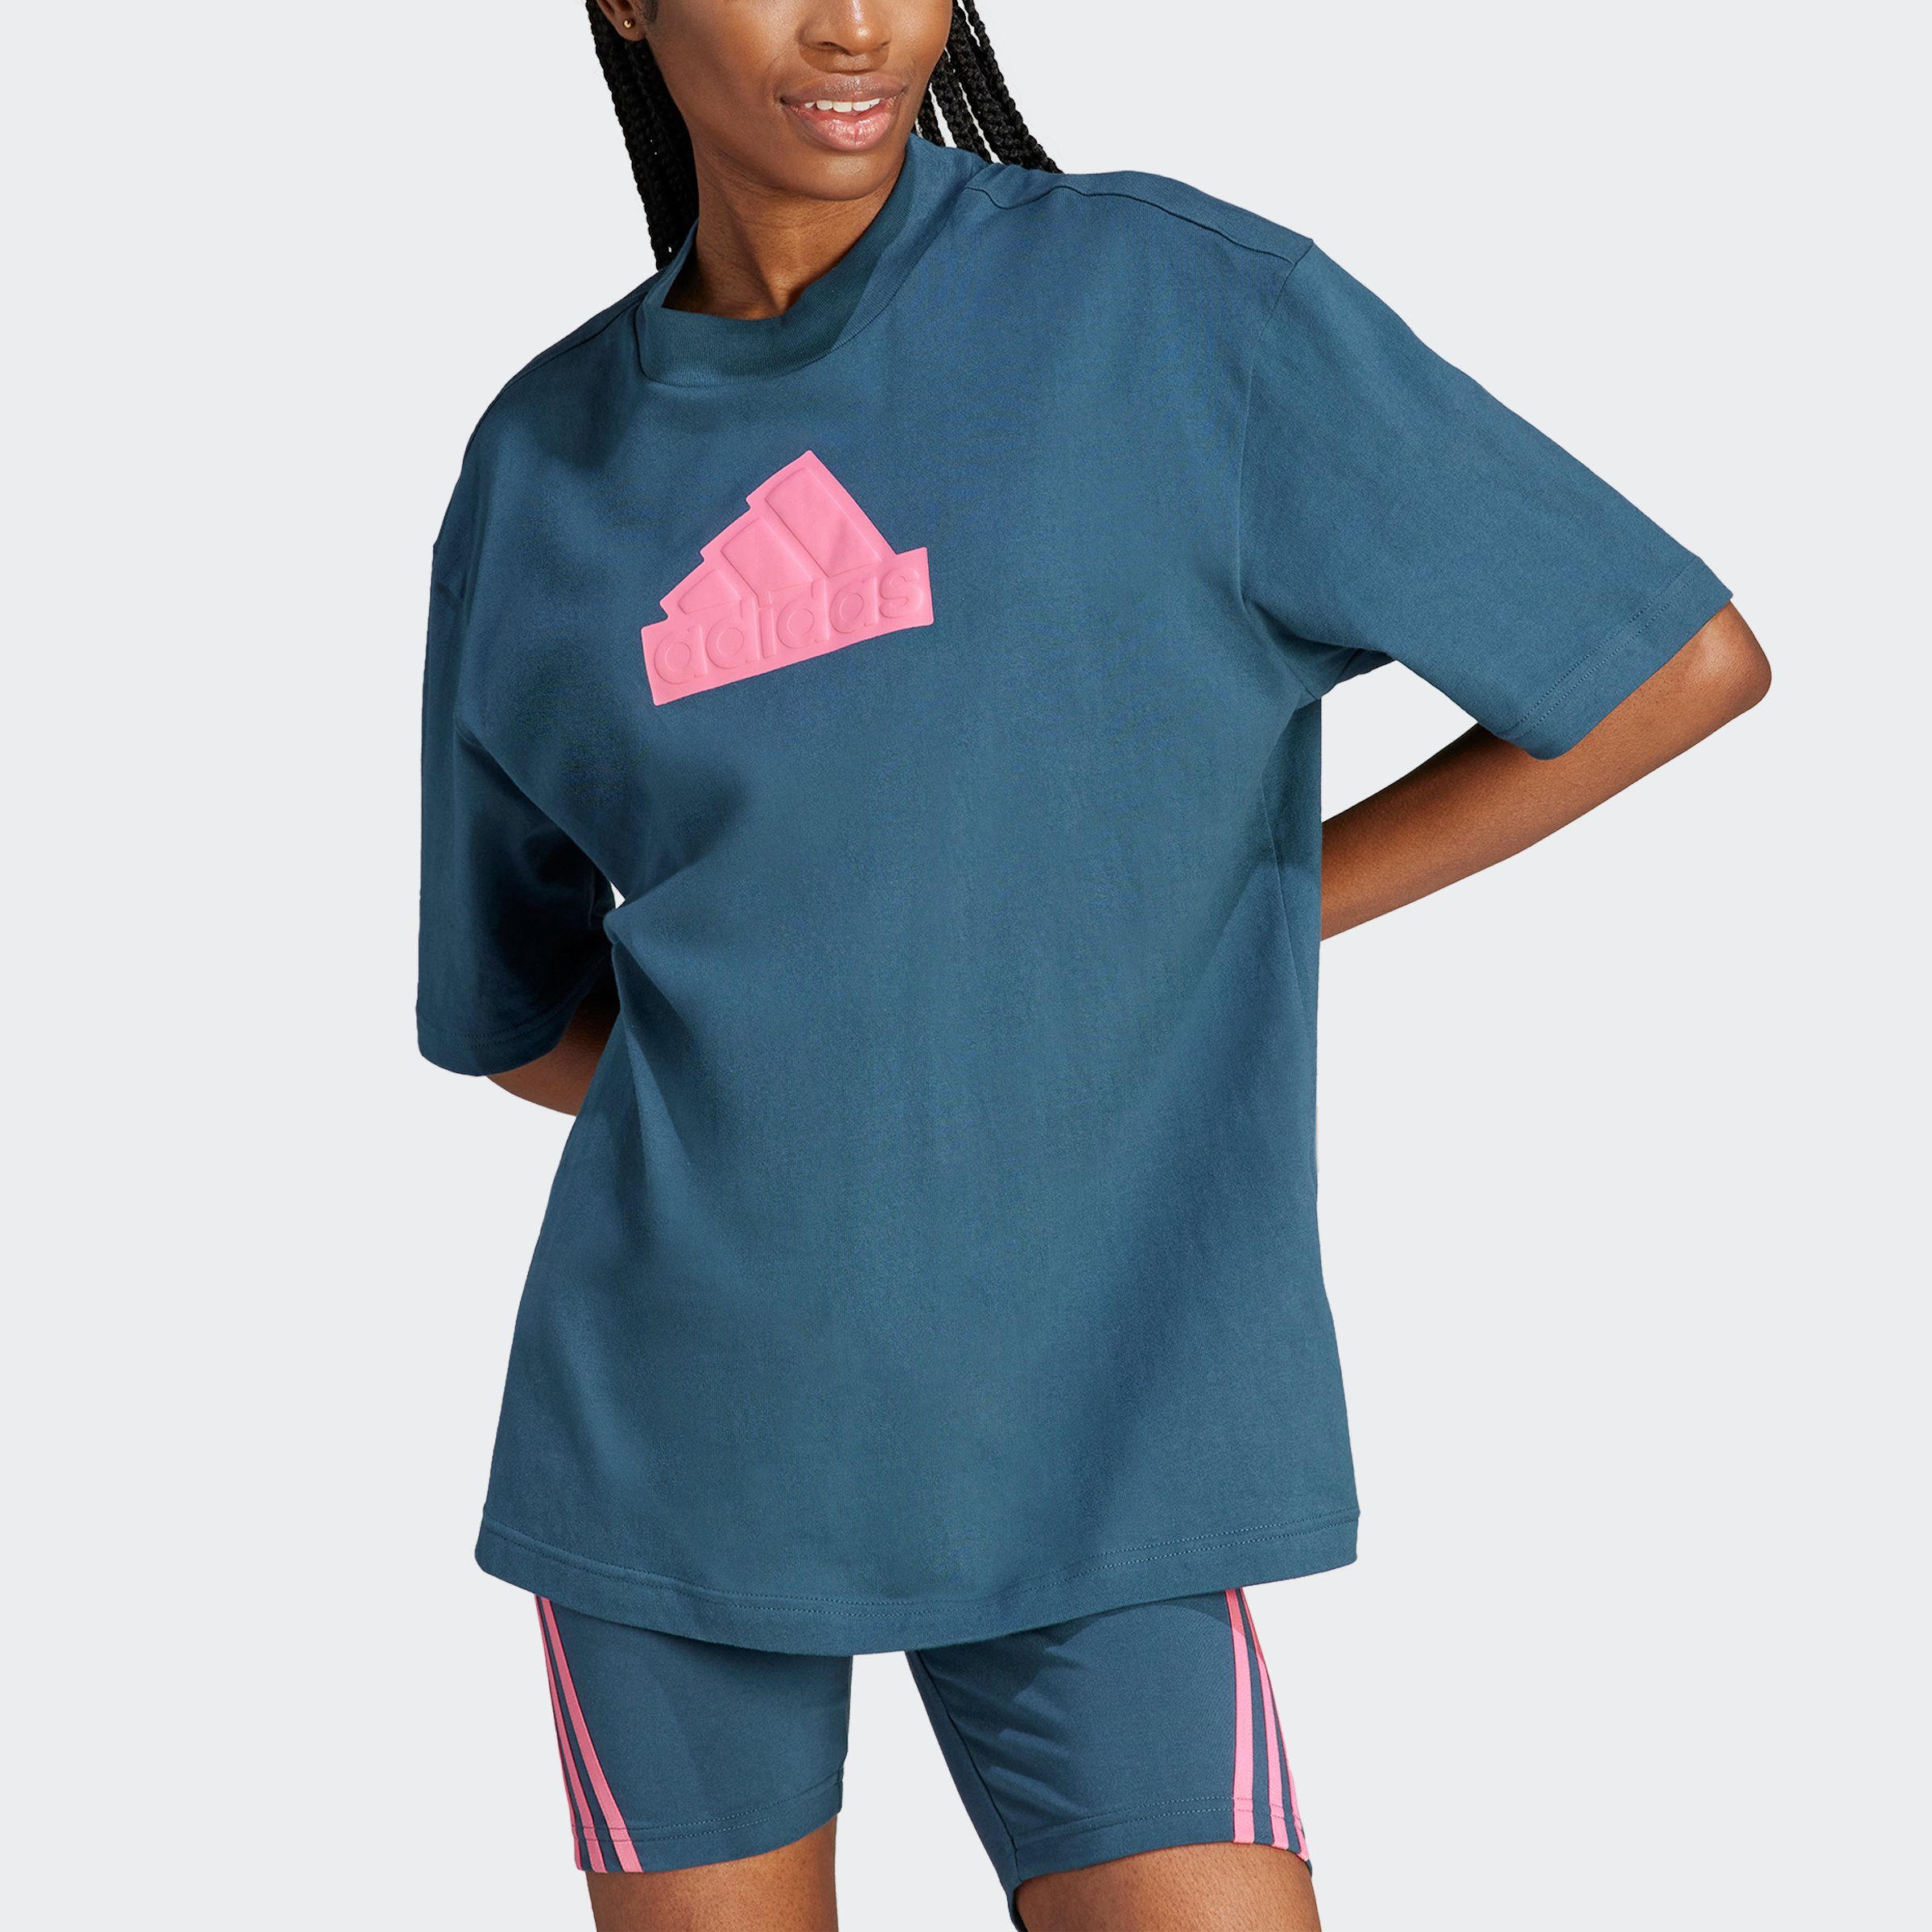 arcngt OF BOYFRIEND ICONS SPORT BADGE T-Shirt Sportswear adidas FUTURE